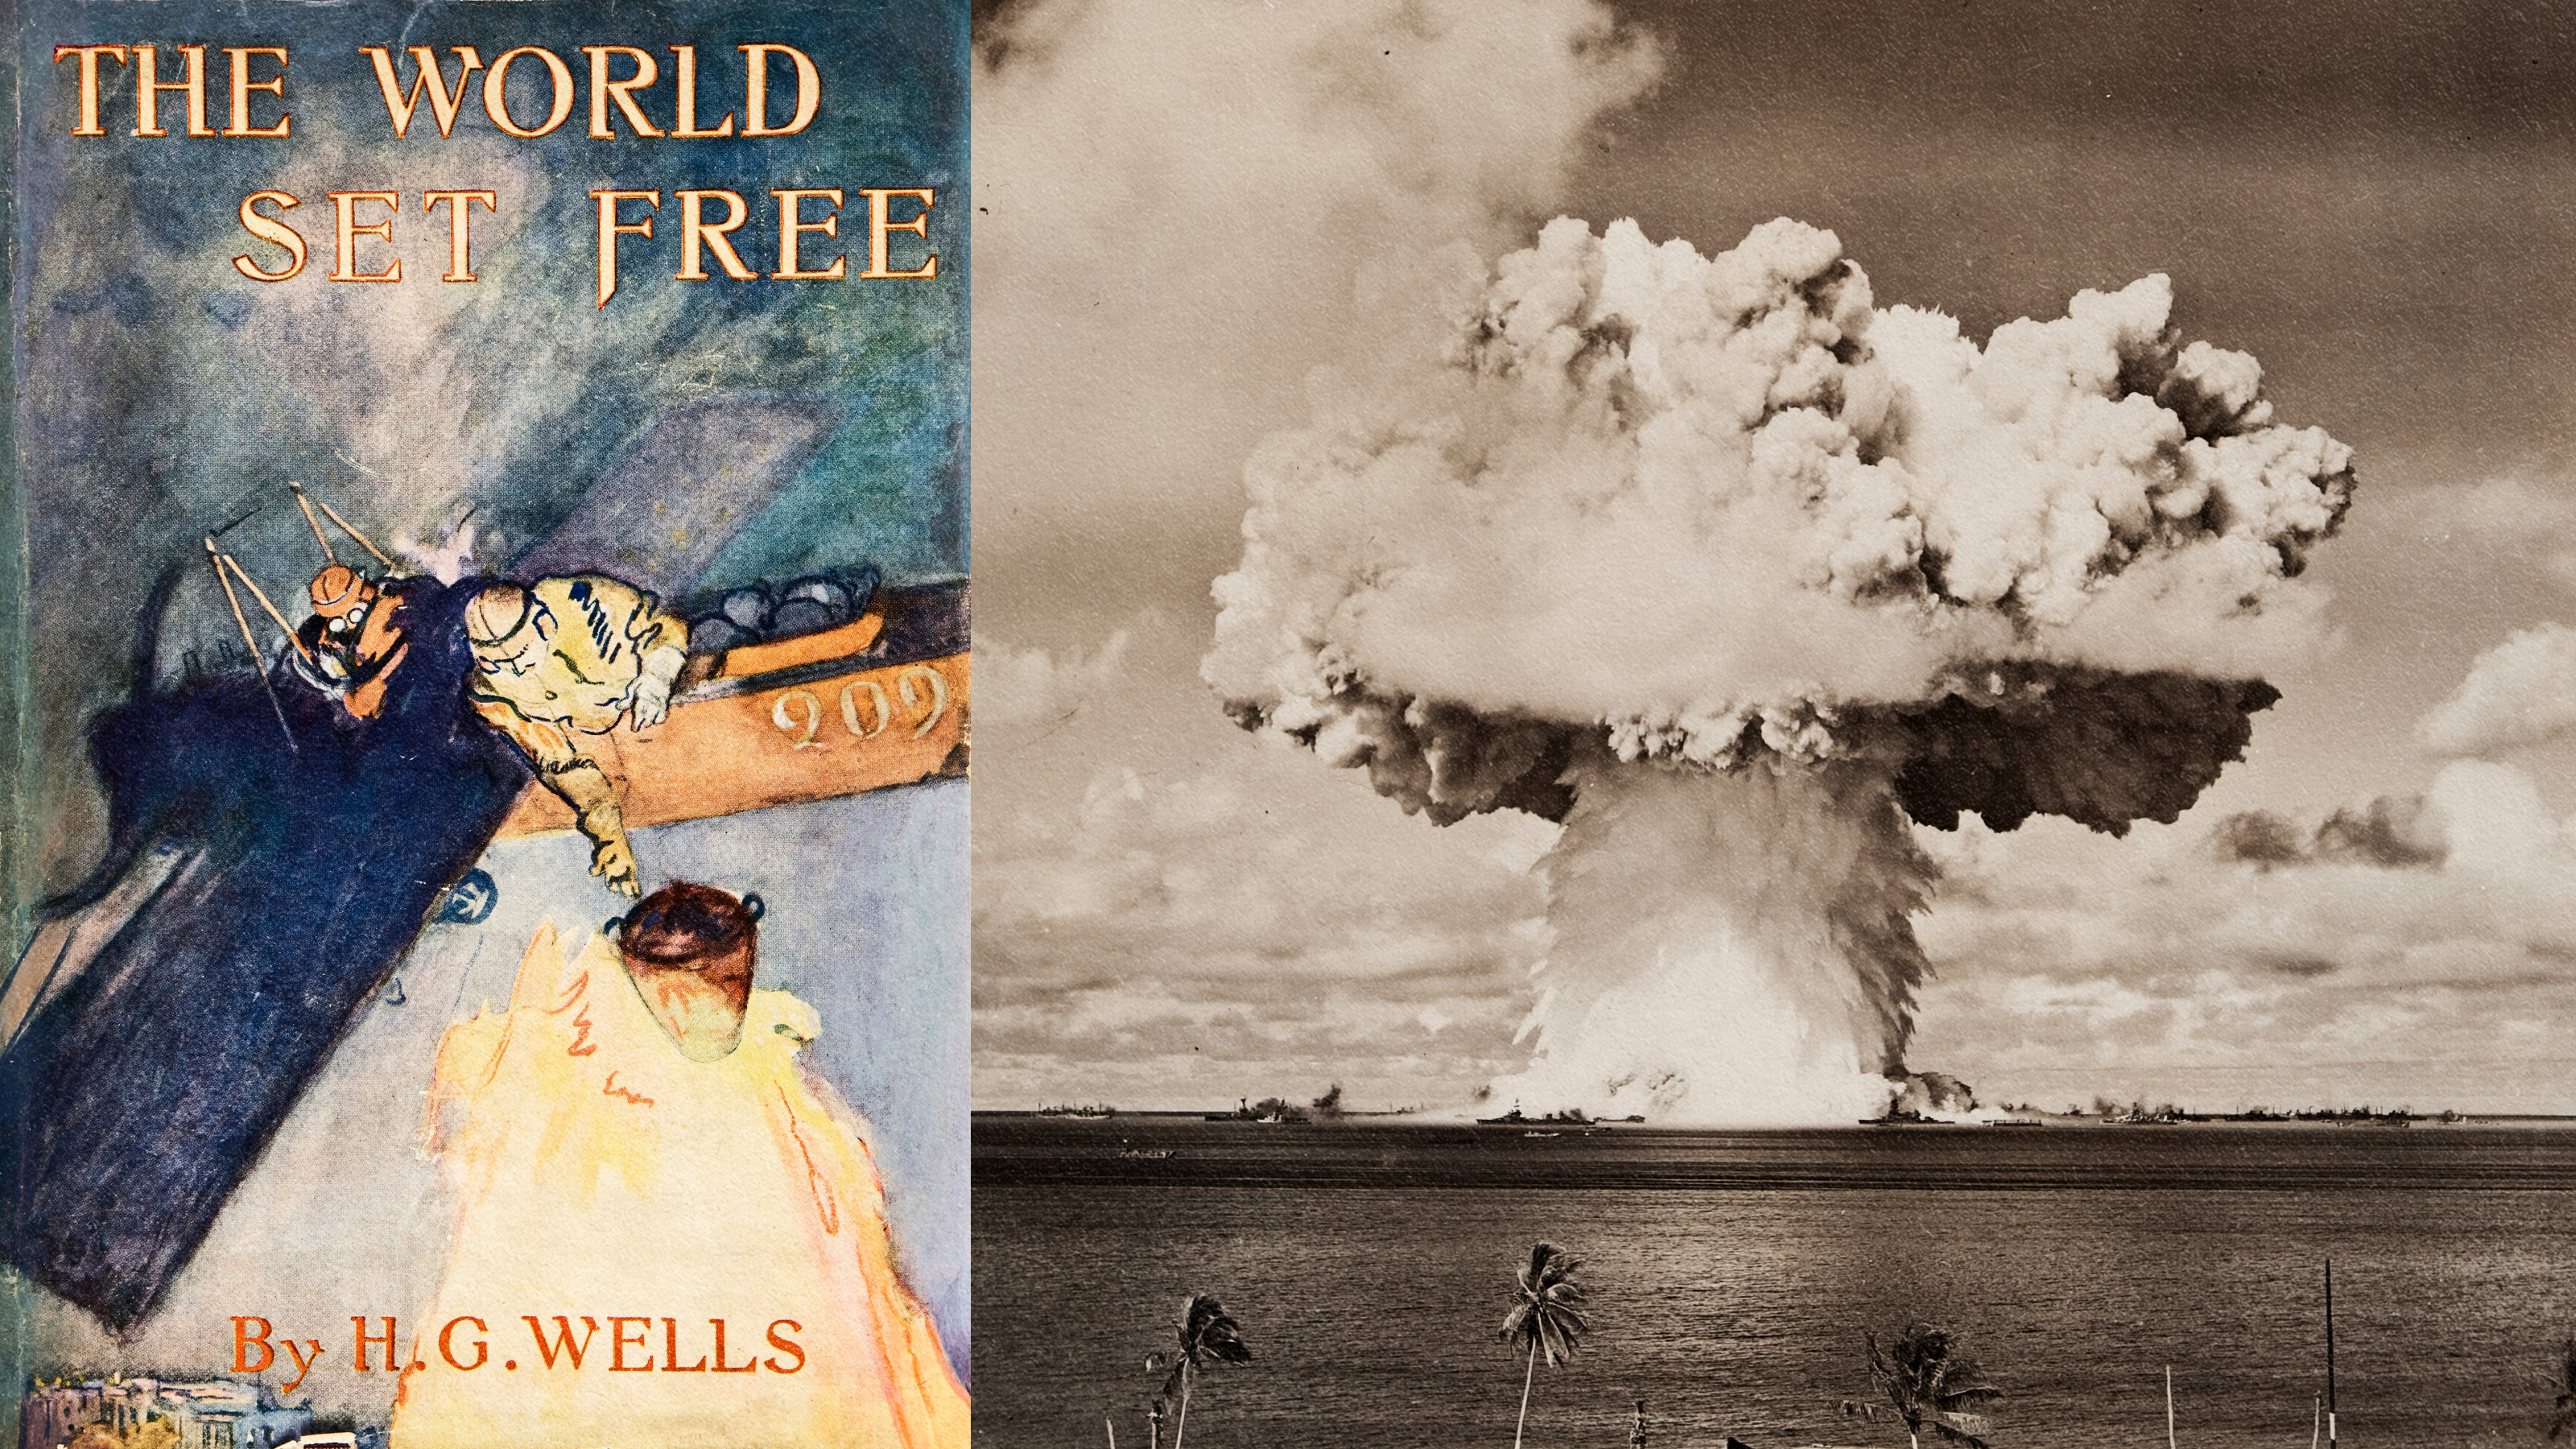 The world set free by Rachel Wells, inspired by Oppenheimer.